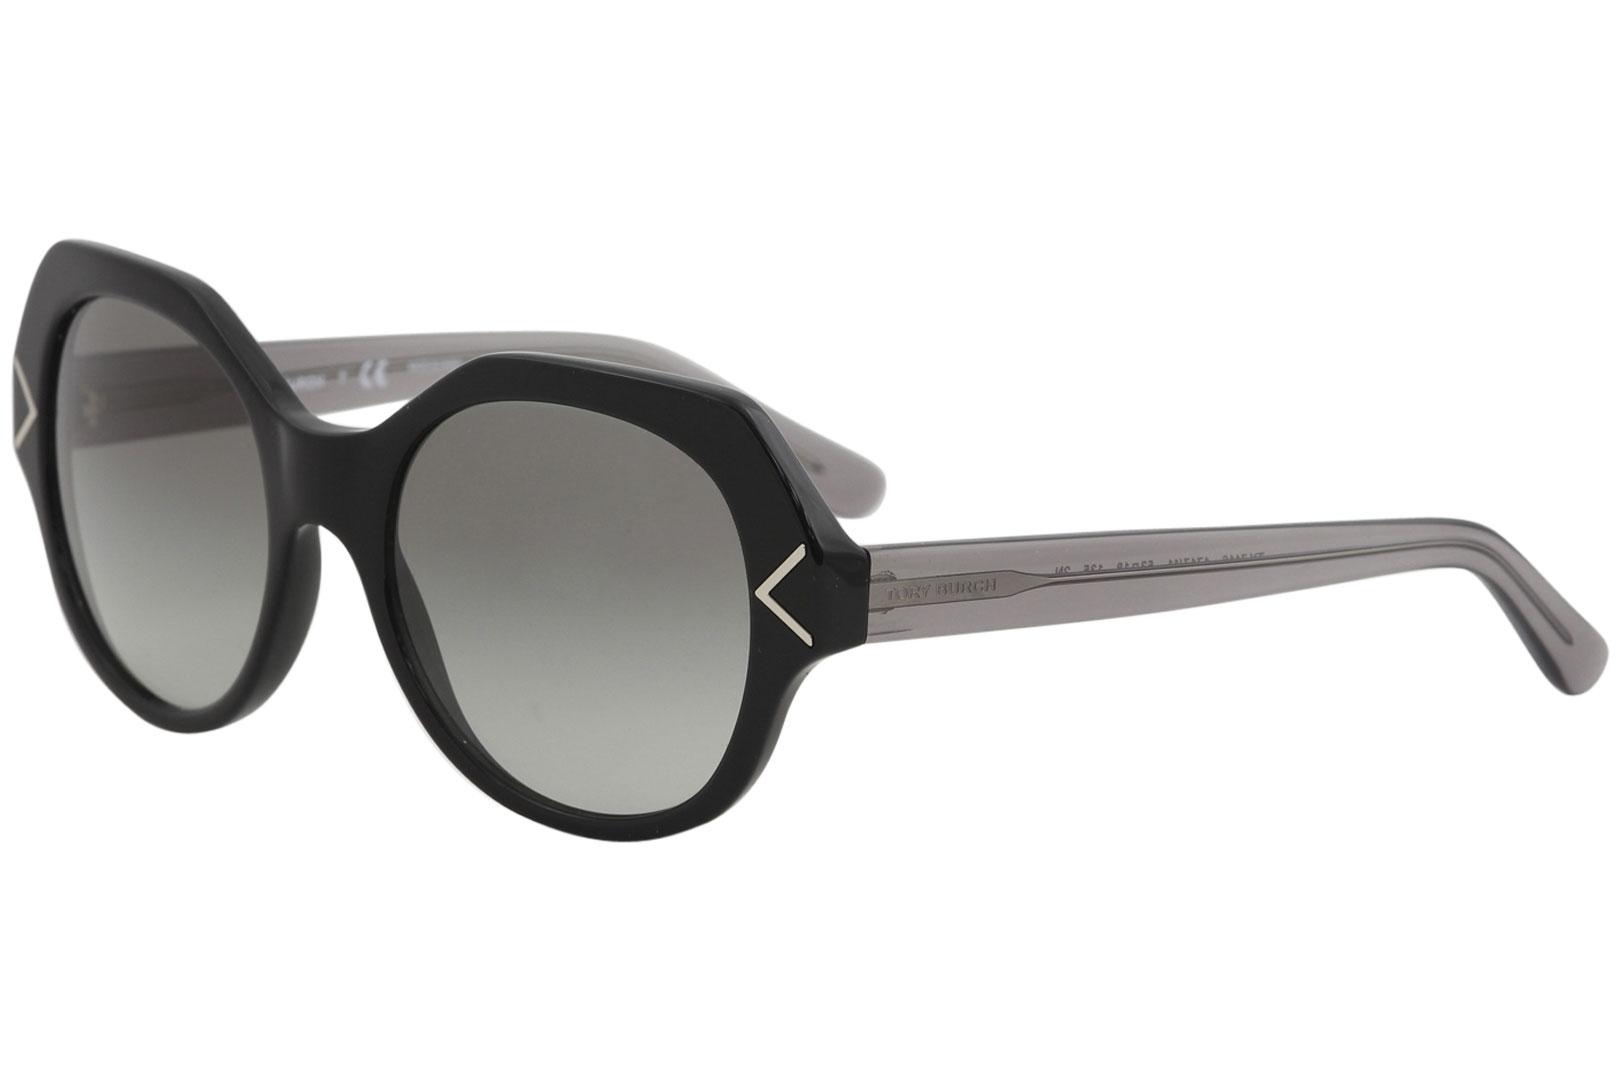 Tory Burch Women's TY7116 TY/7116 Fashion Round Sunglasses - Black/Grey Gradient   1717/11 - Lens 53 Bridge 18 B 49.5 ED 57 Temple 135mm